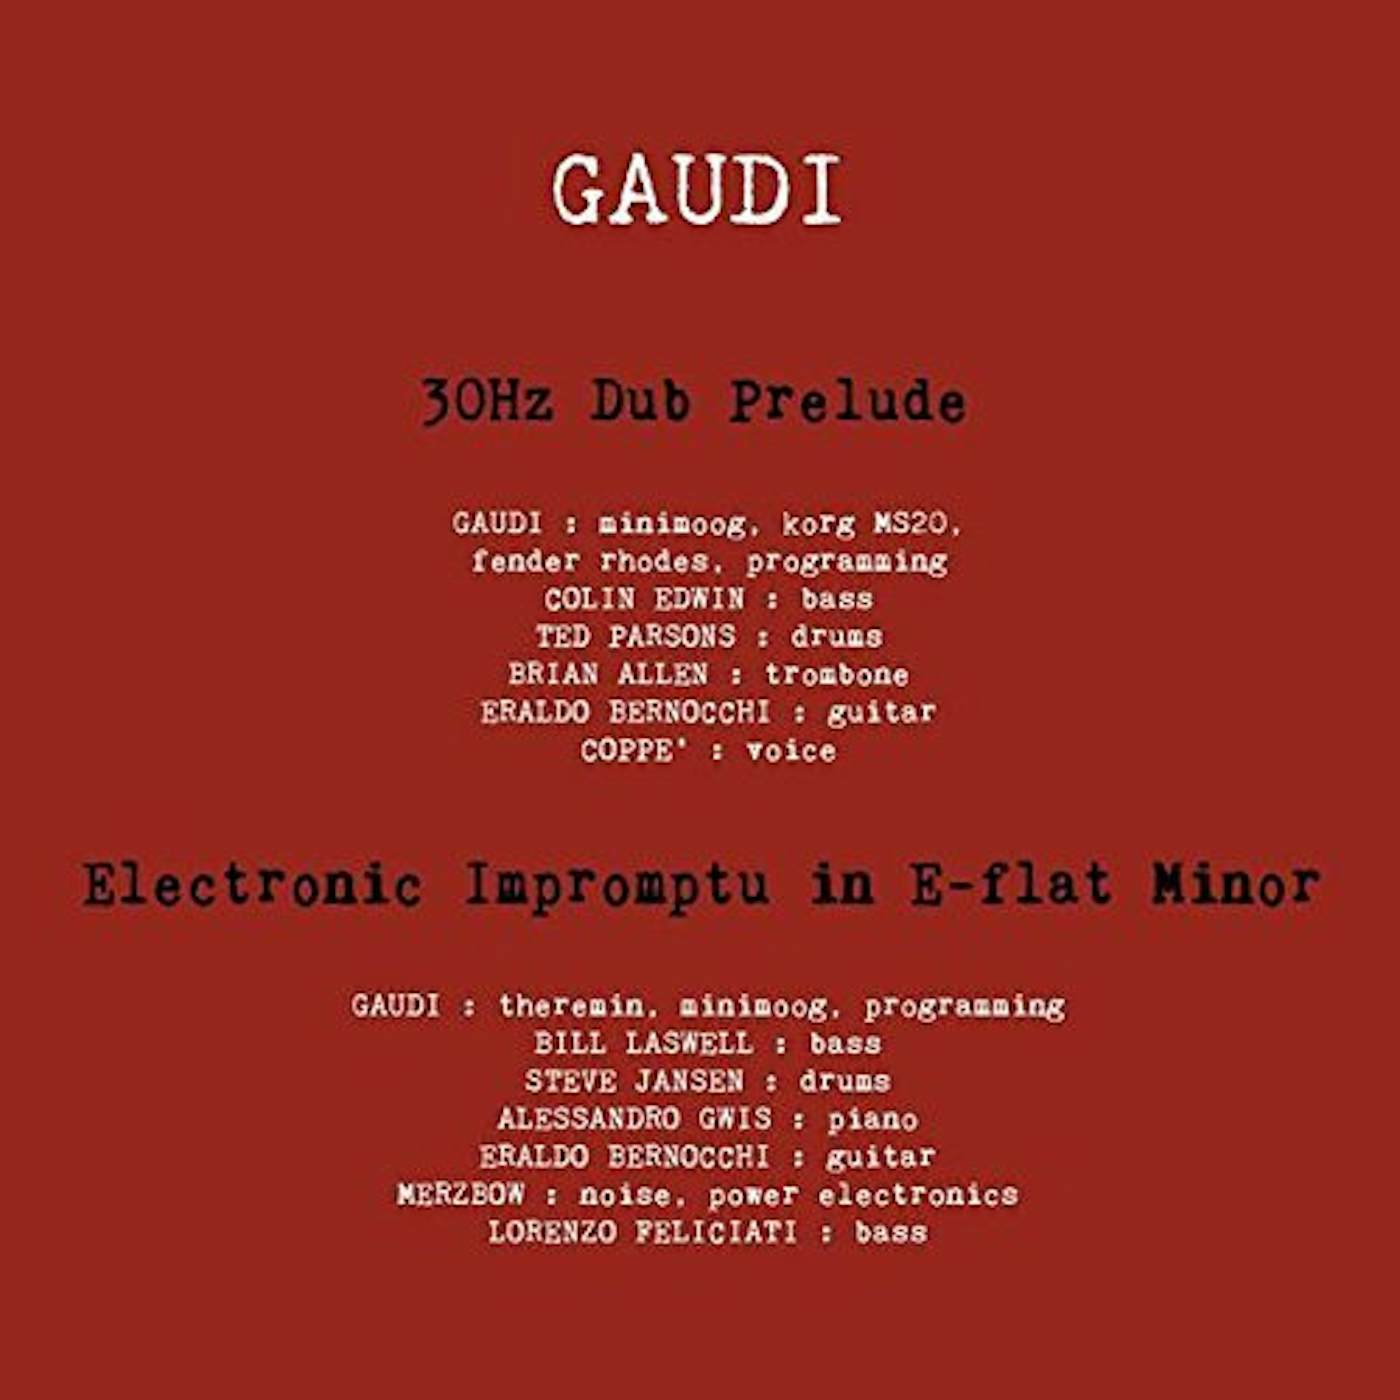 Gaudi EP Vinyl Record